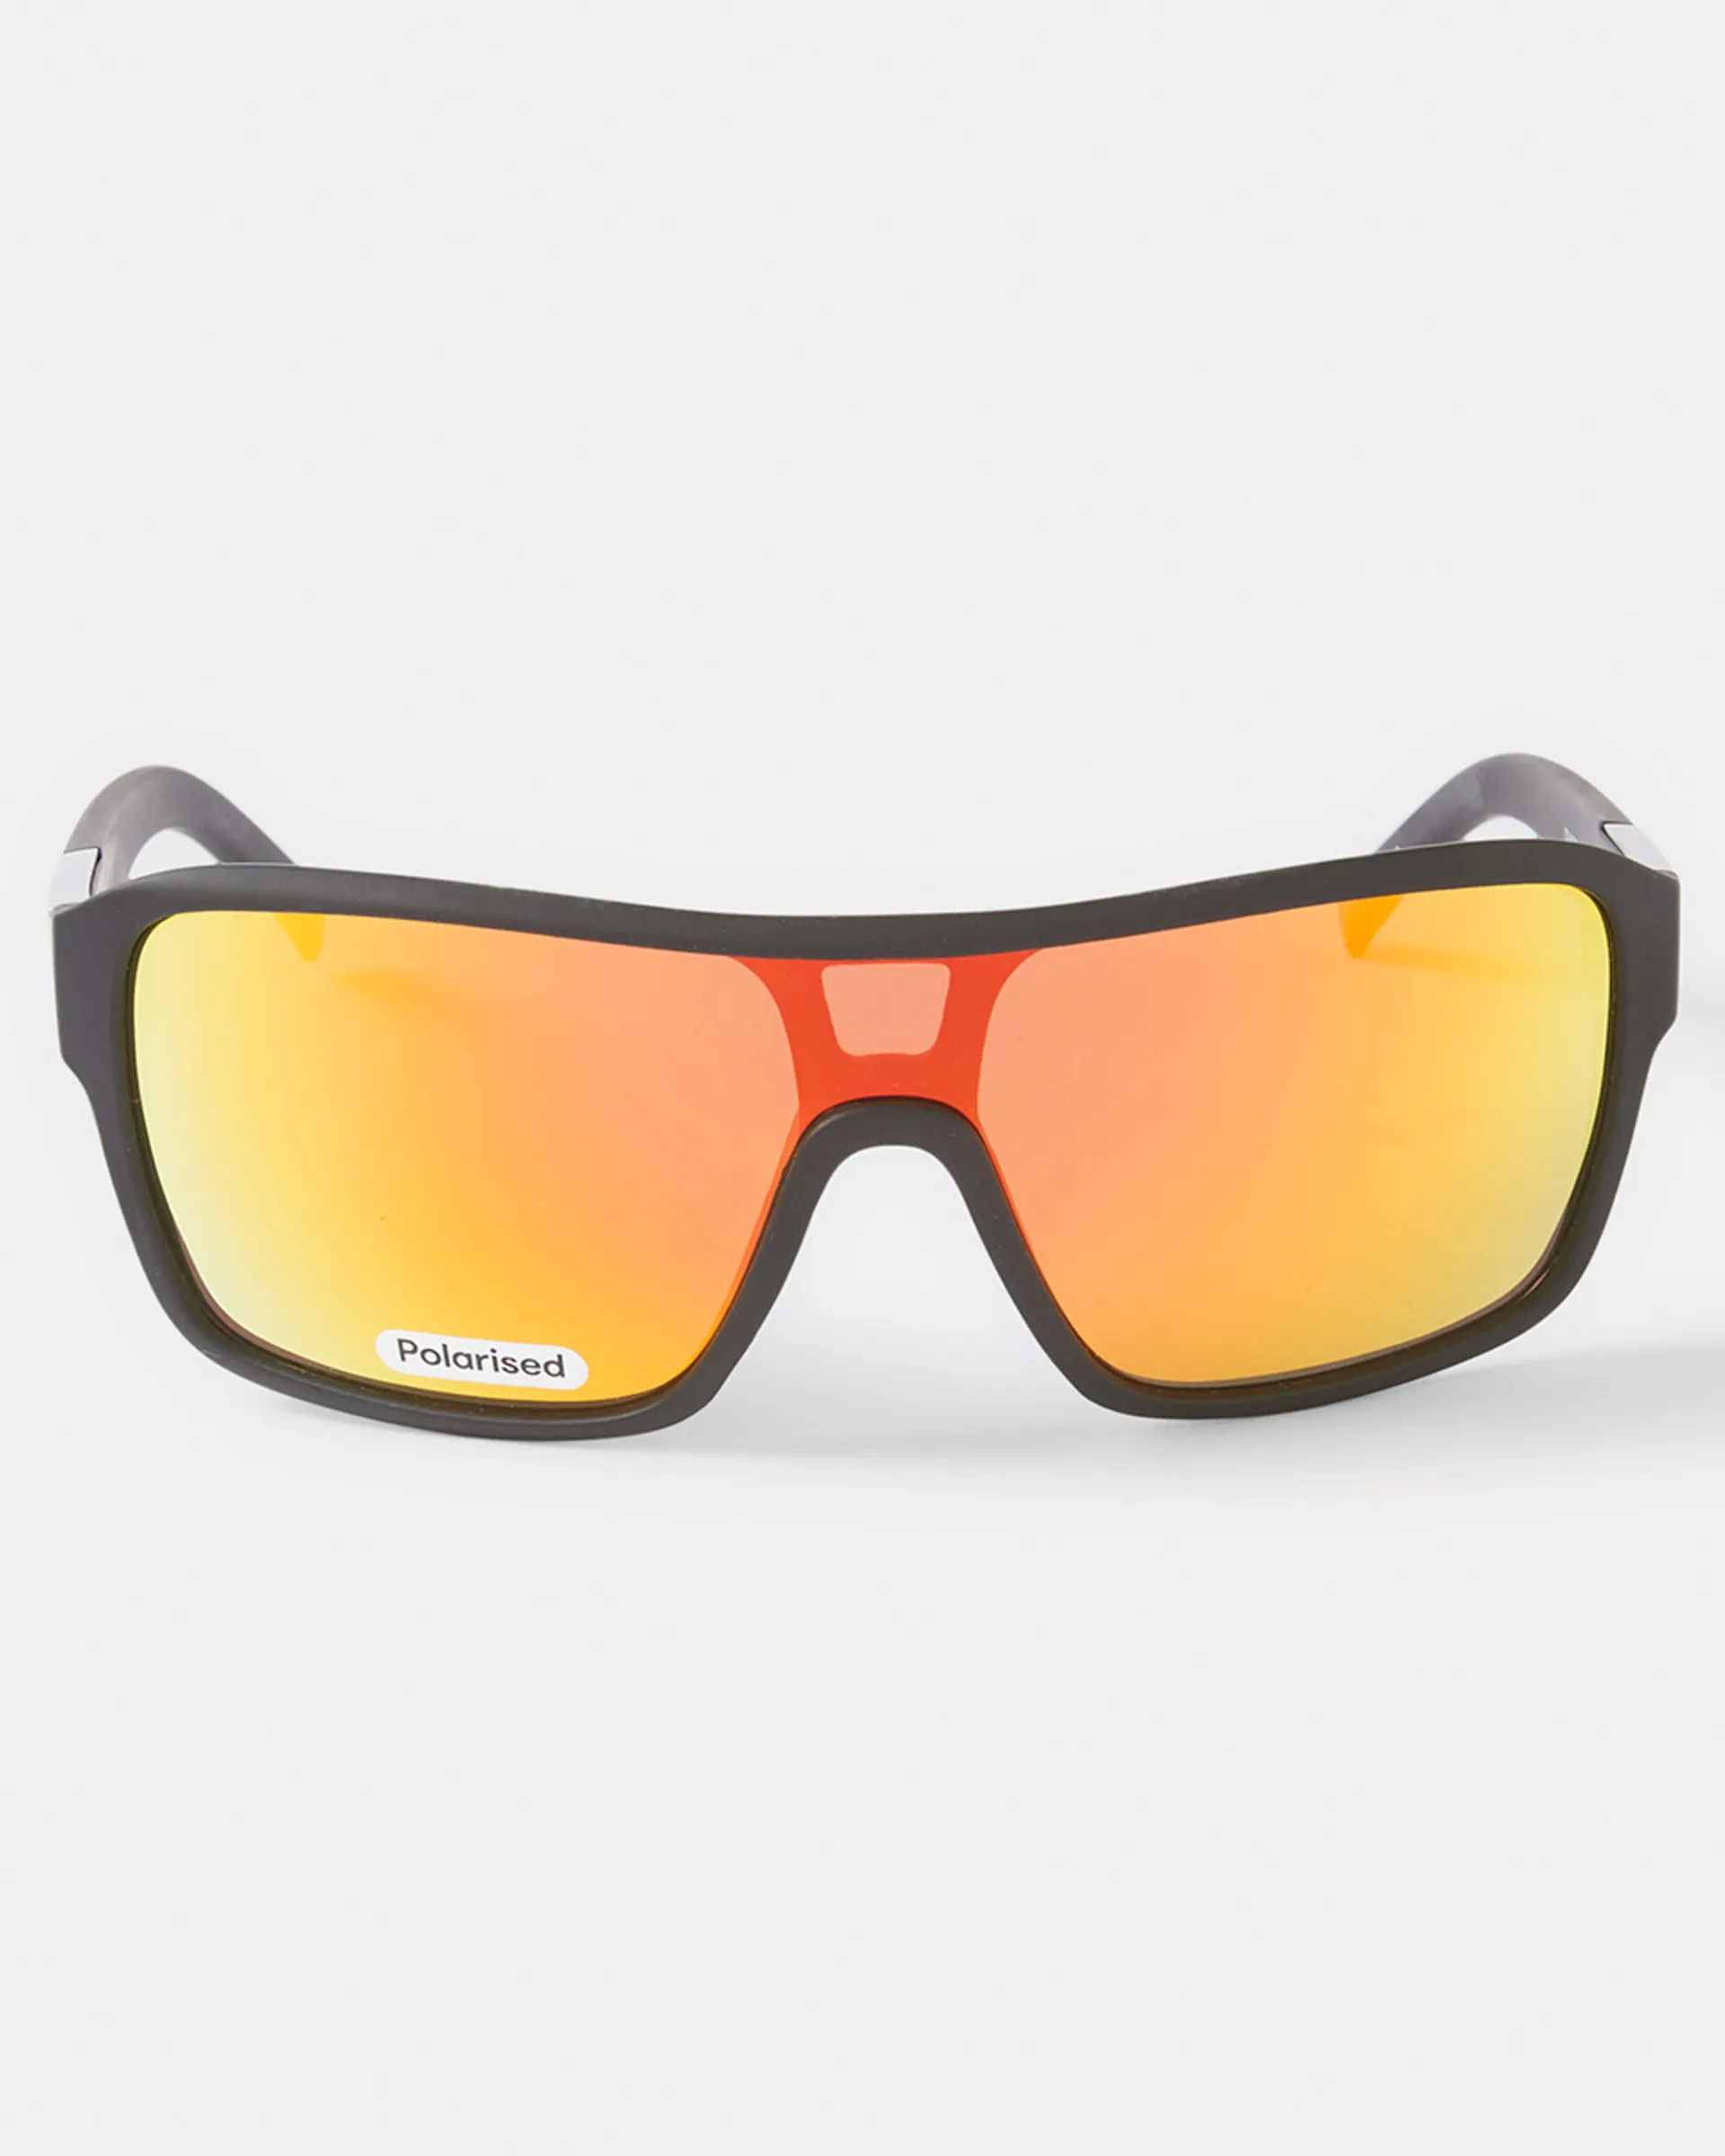 Jackeroo D-Frame Sunglasses